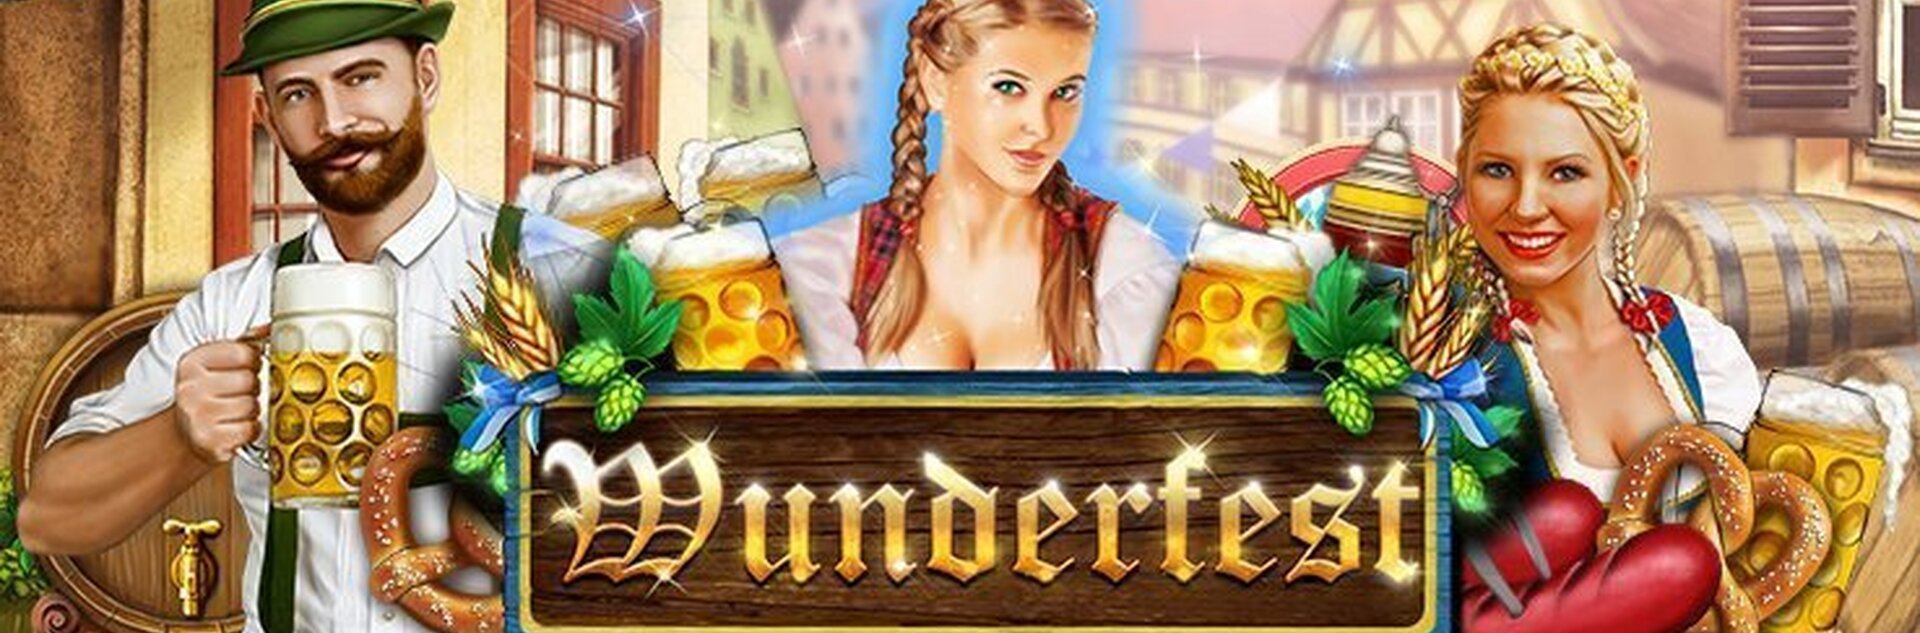 Play Wunderfest Free Slot